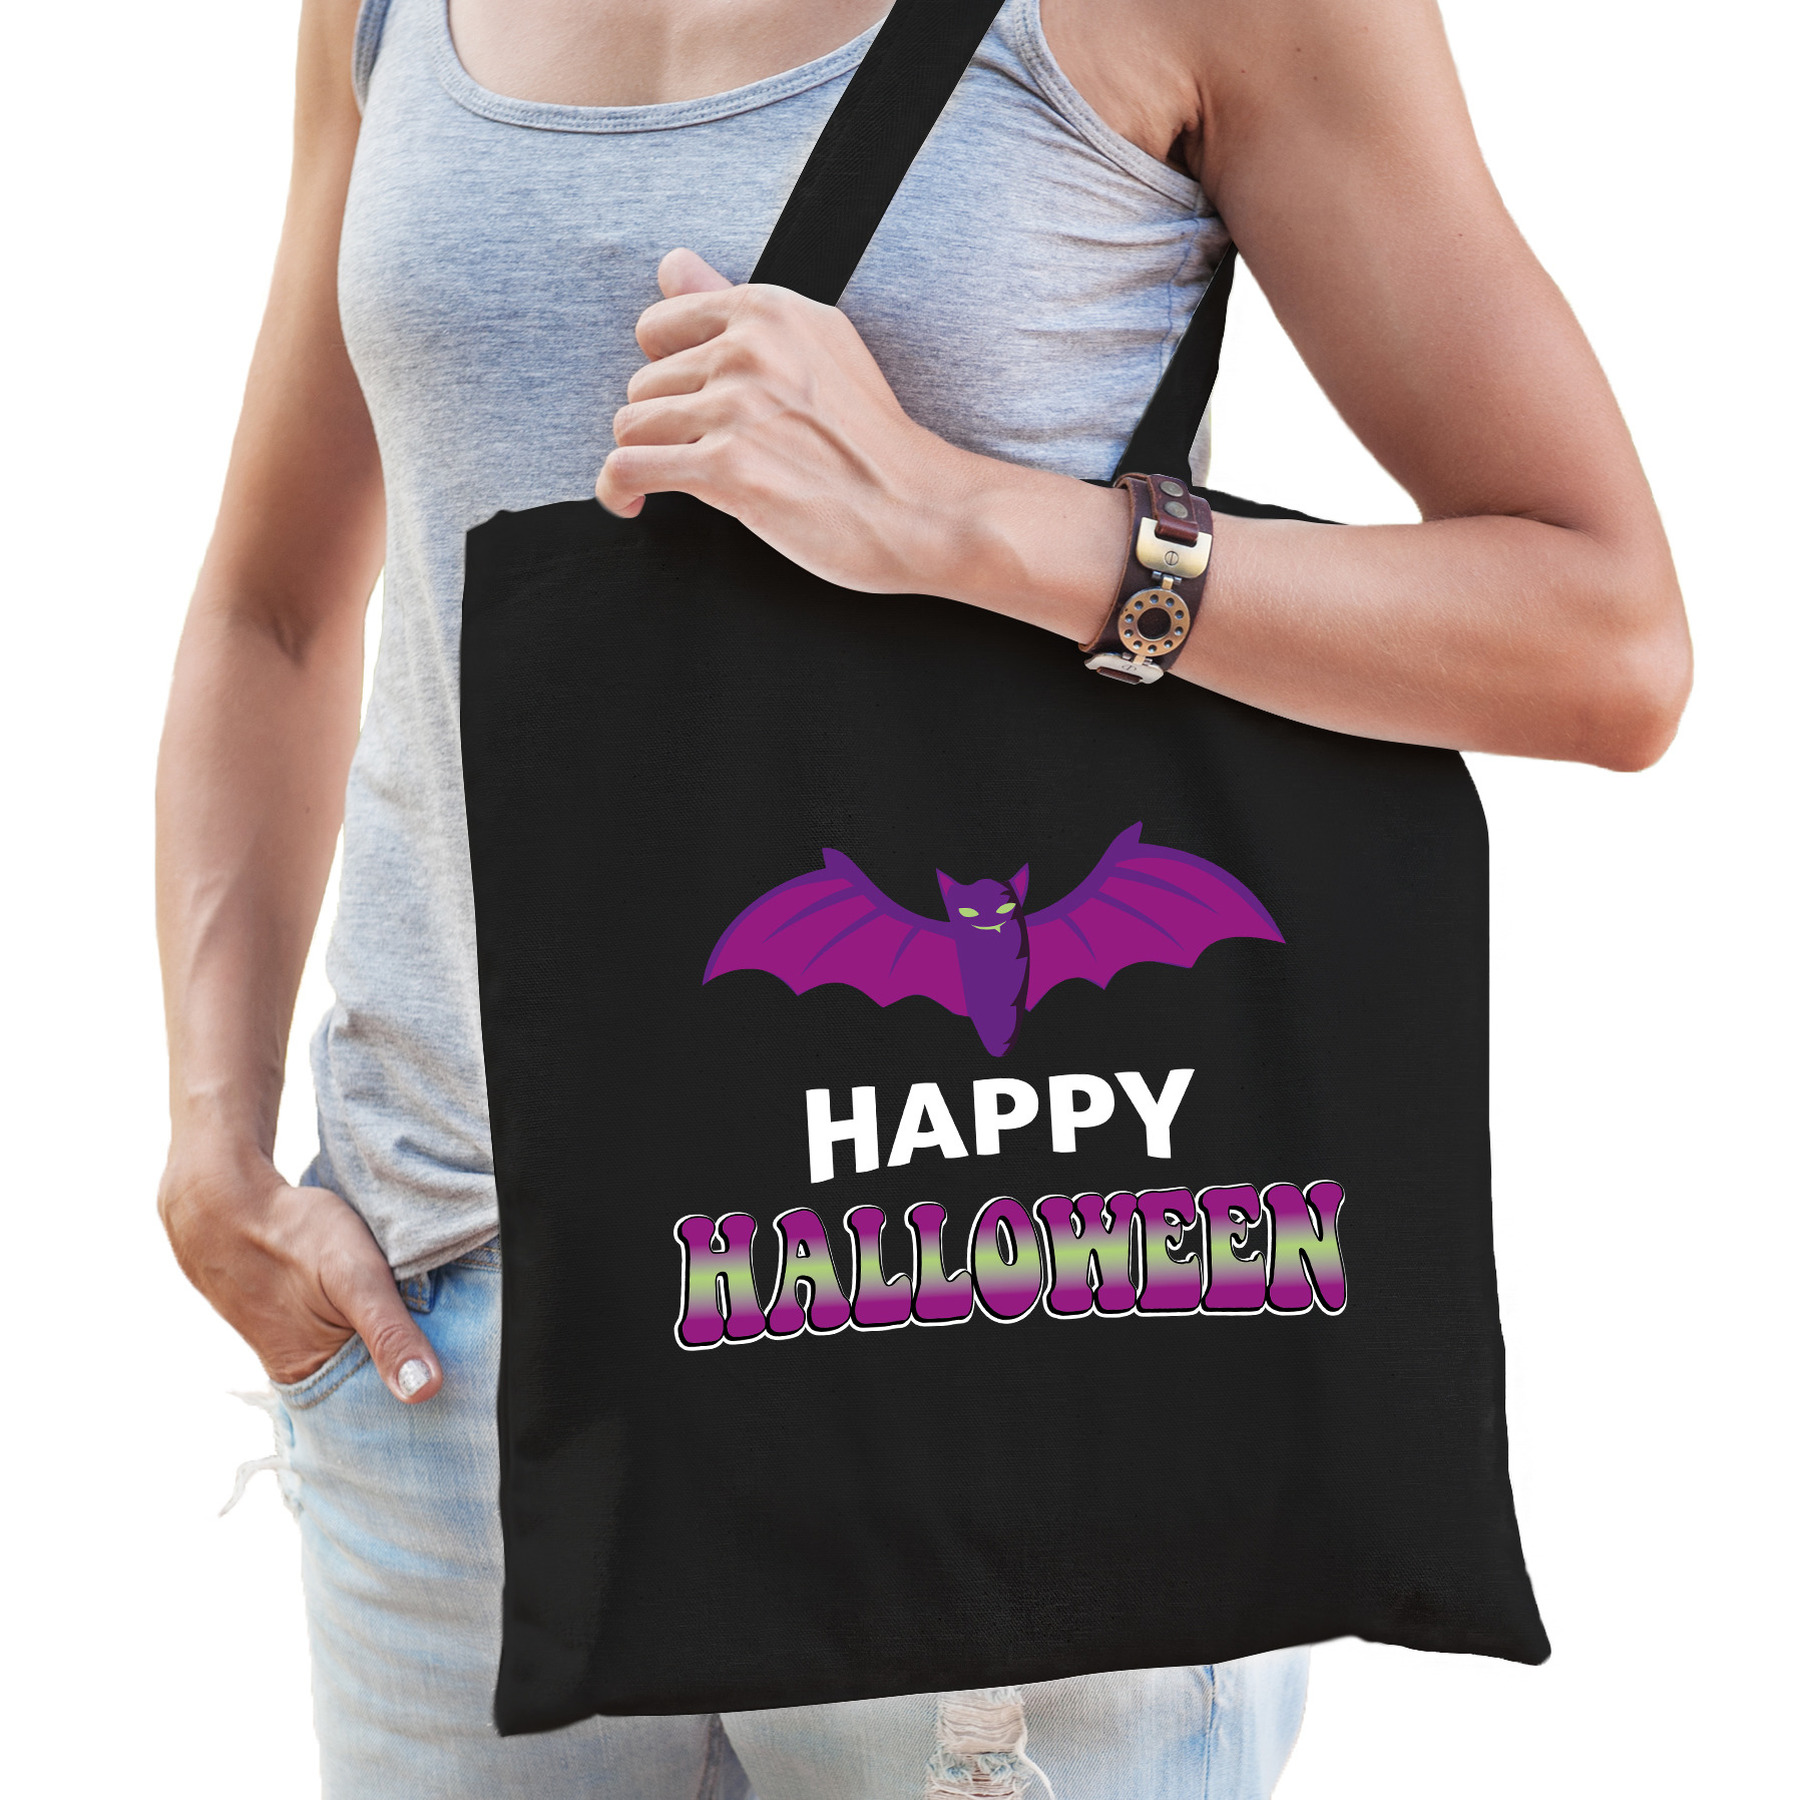 Vleermuis - happy halloween trick or treat katoenen tas/ snoep tas zwart